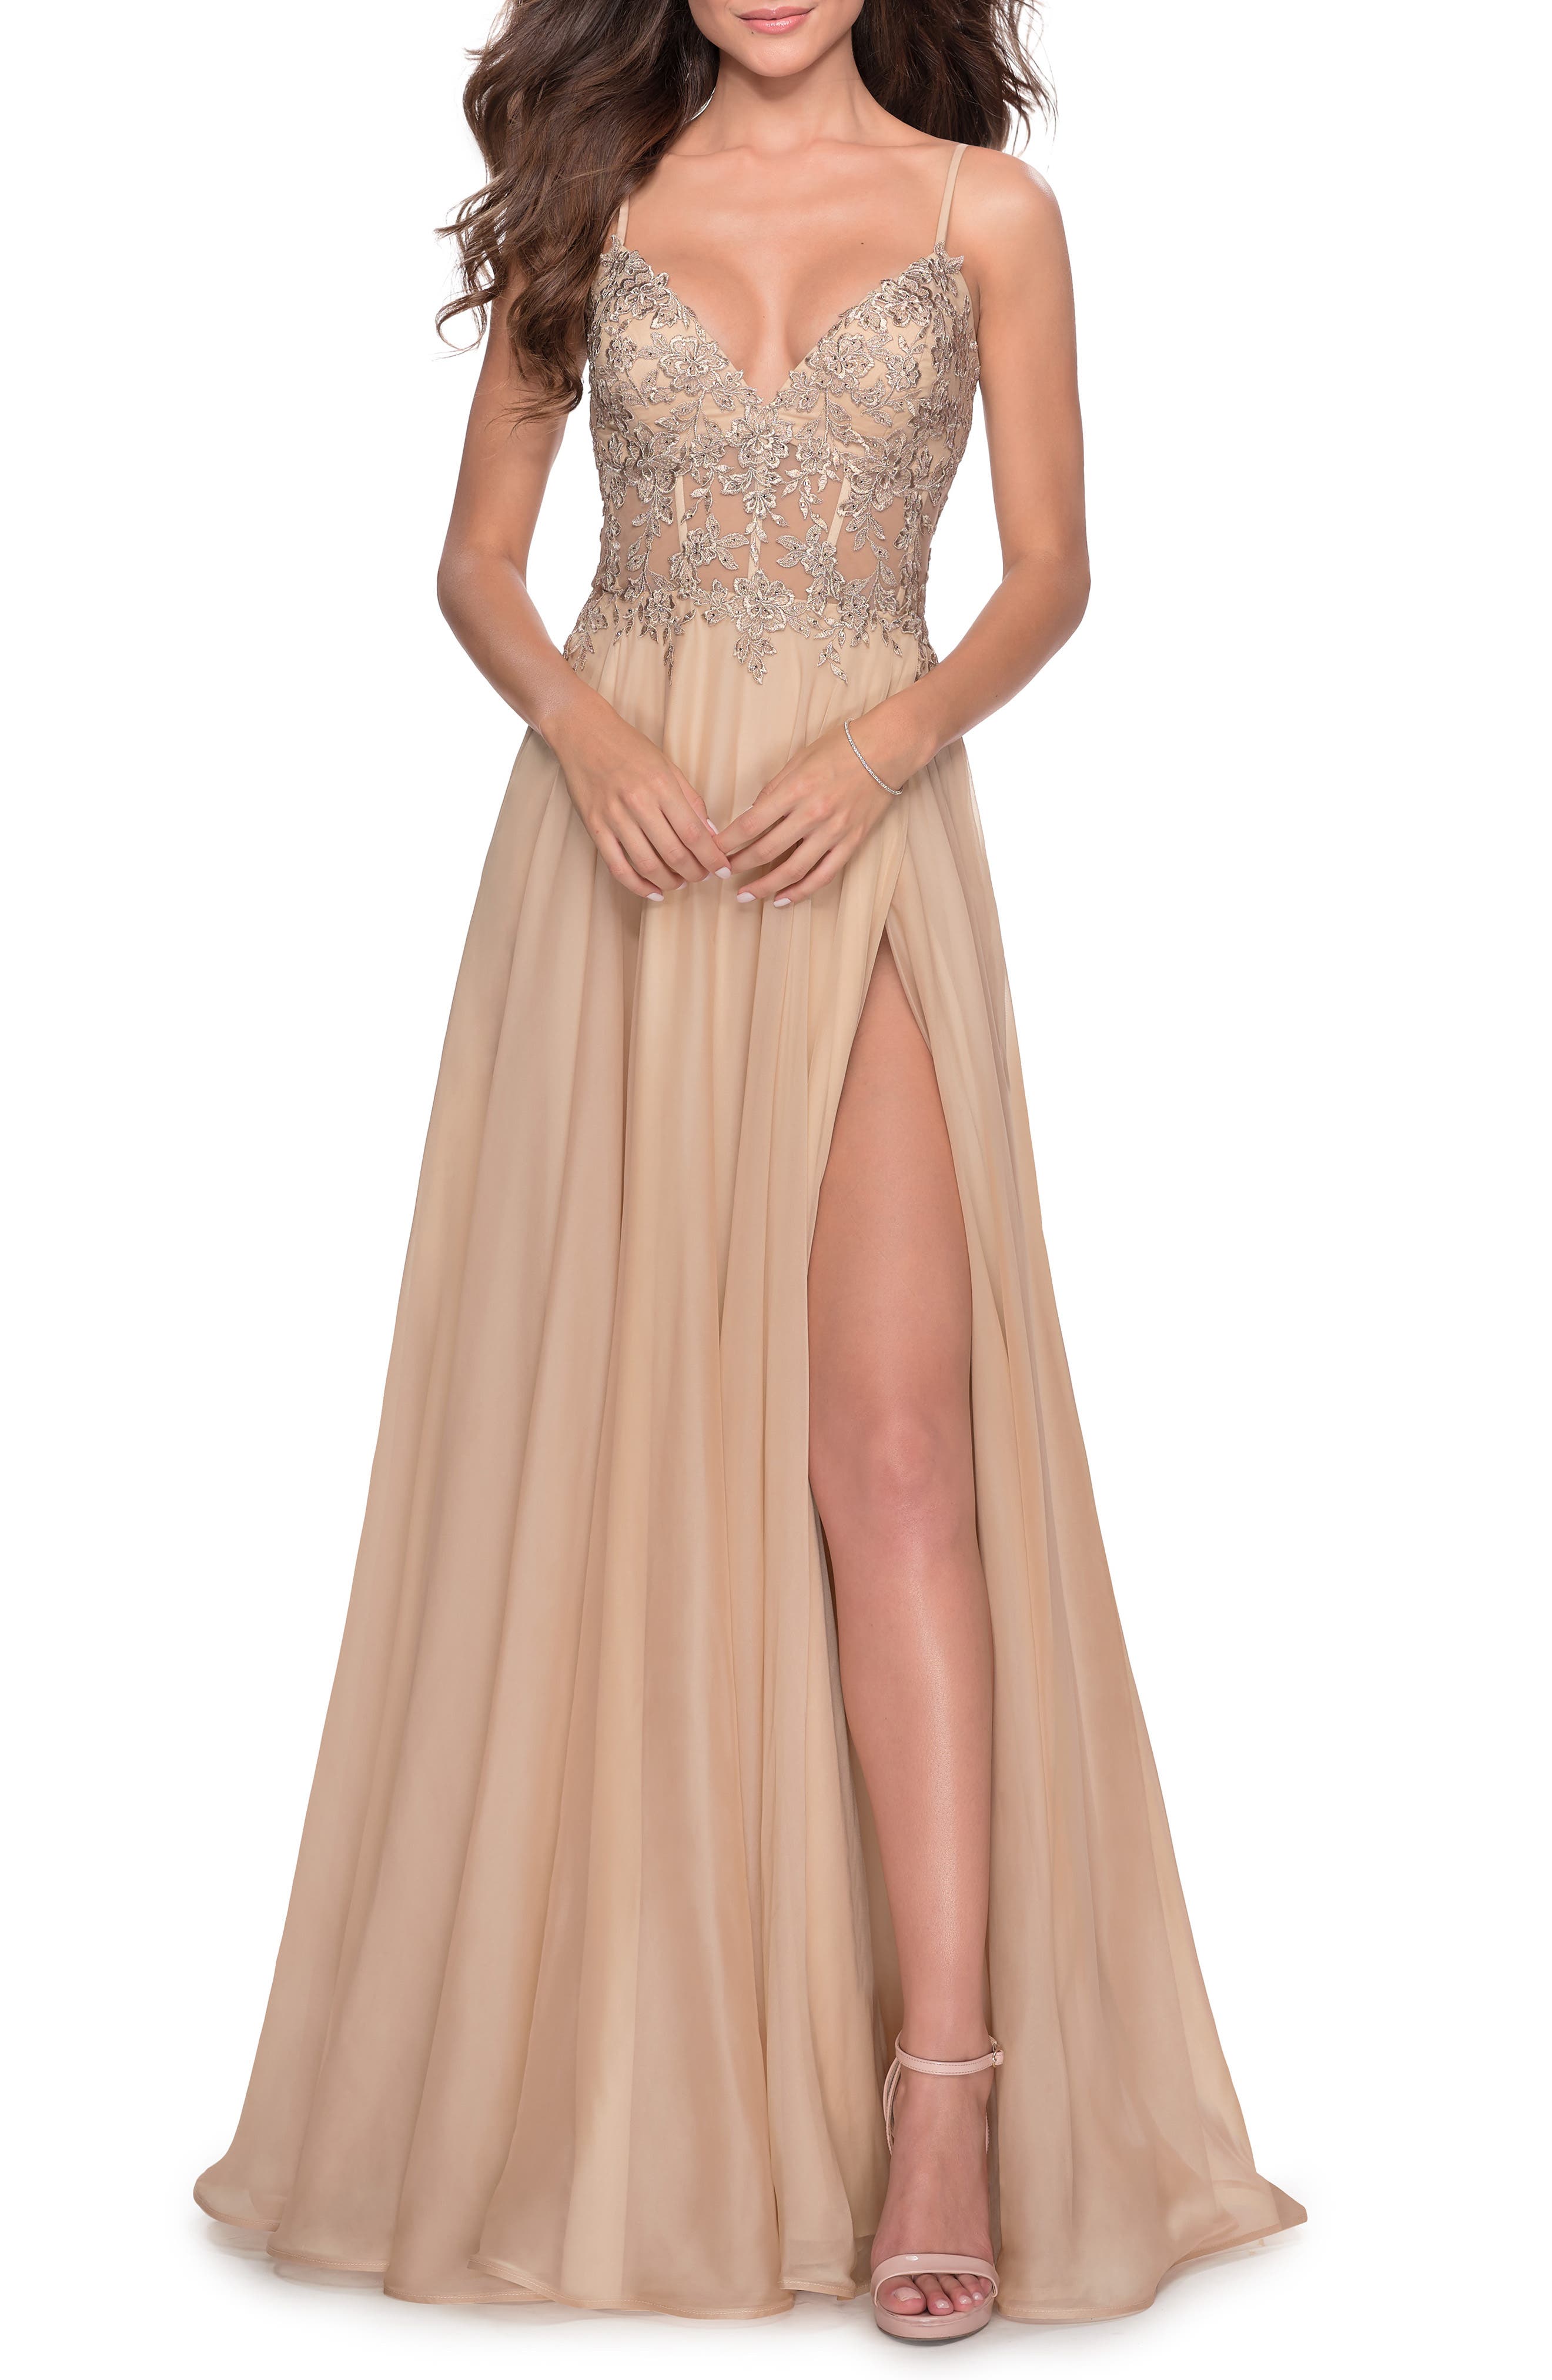 Beige Formal Dresses ☀ Evening Gowns ...